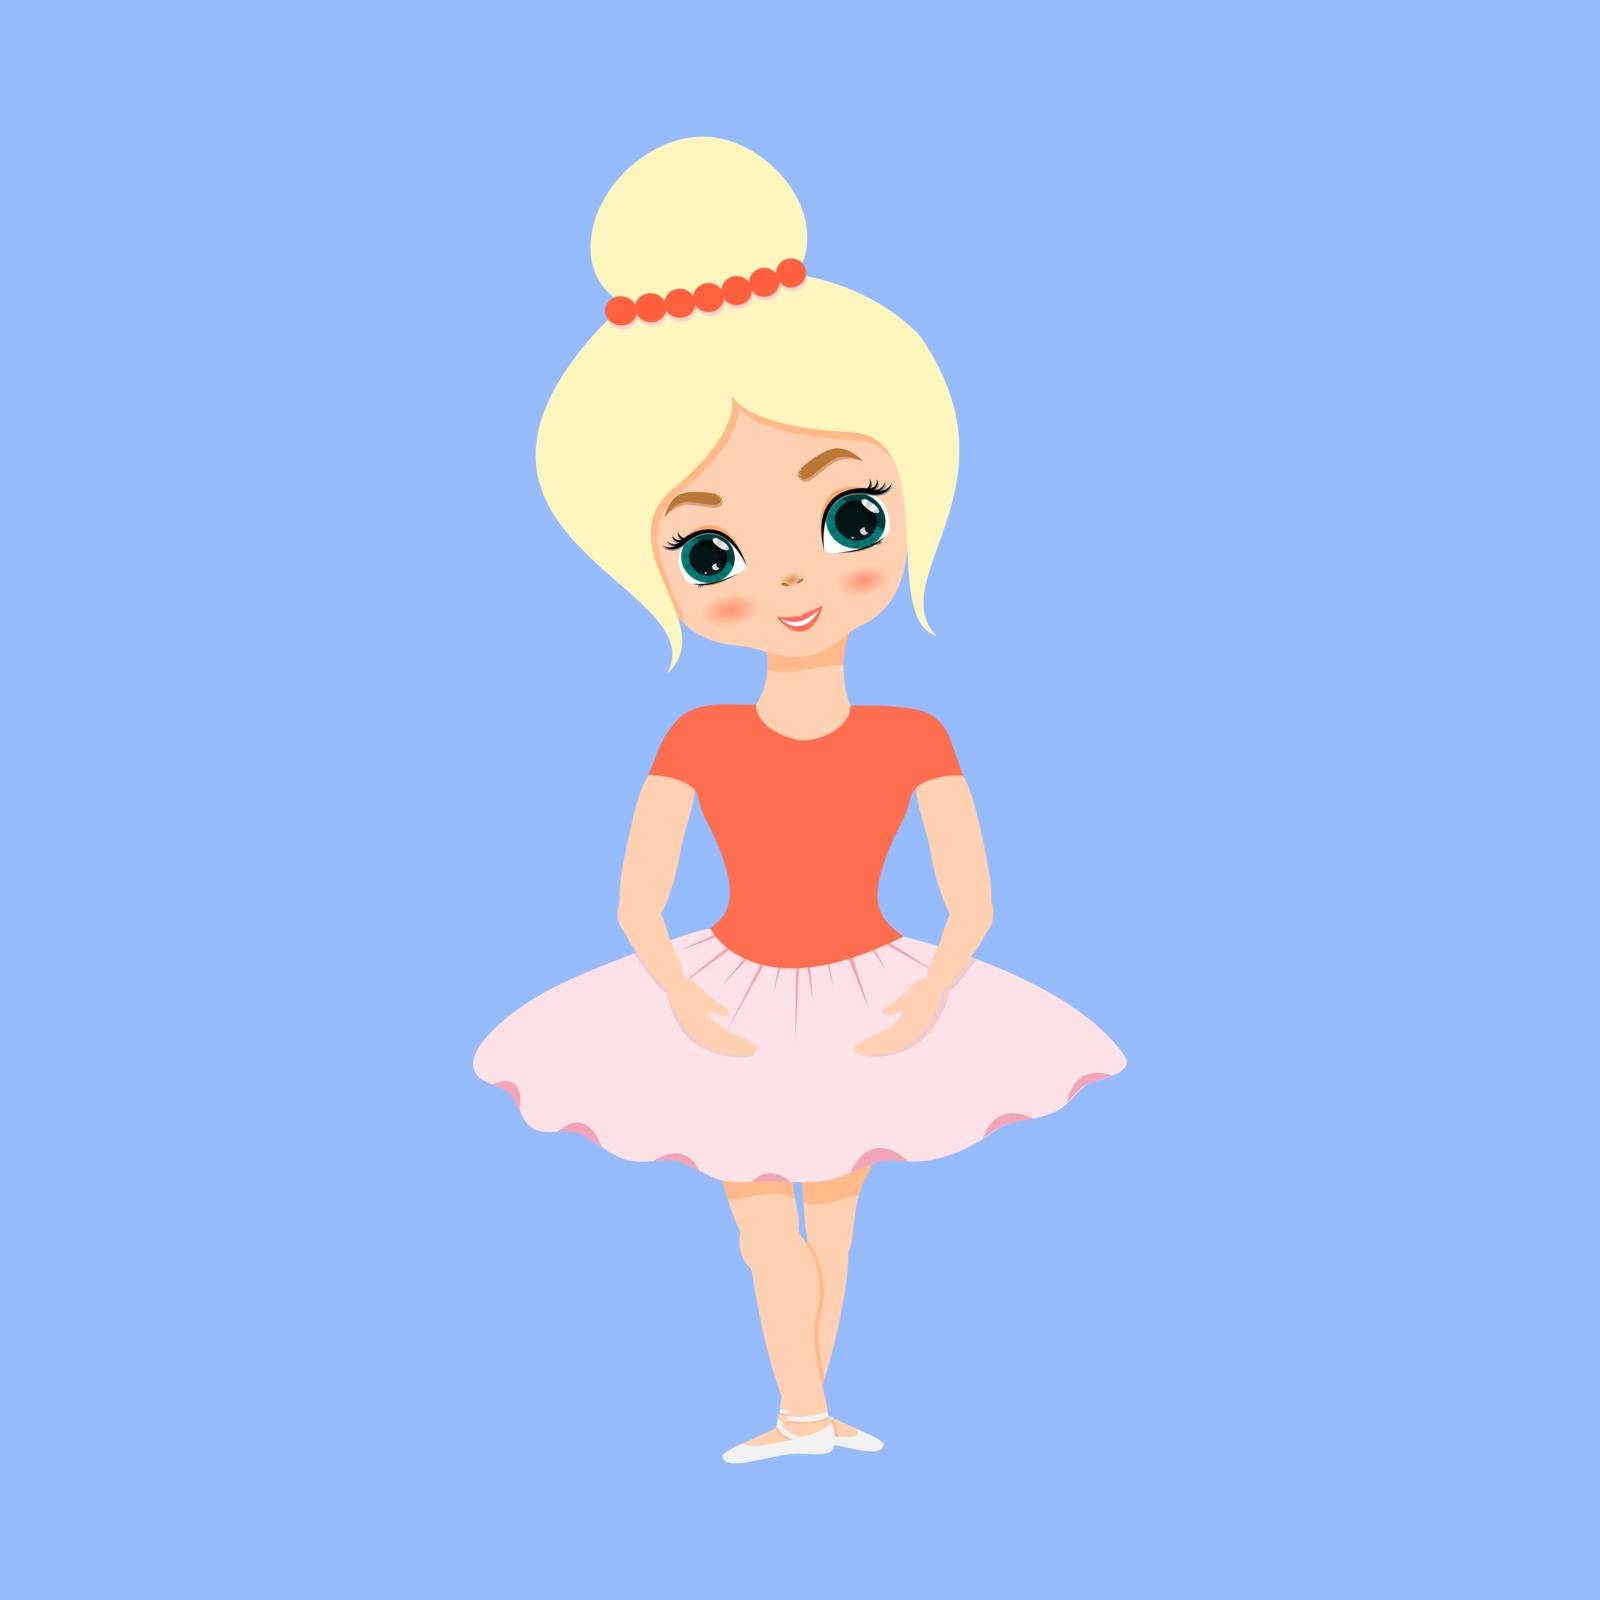 Cute small ballerina dancing. Ballerina girl in pink tutu dress. by Olena92